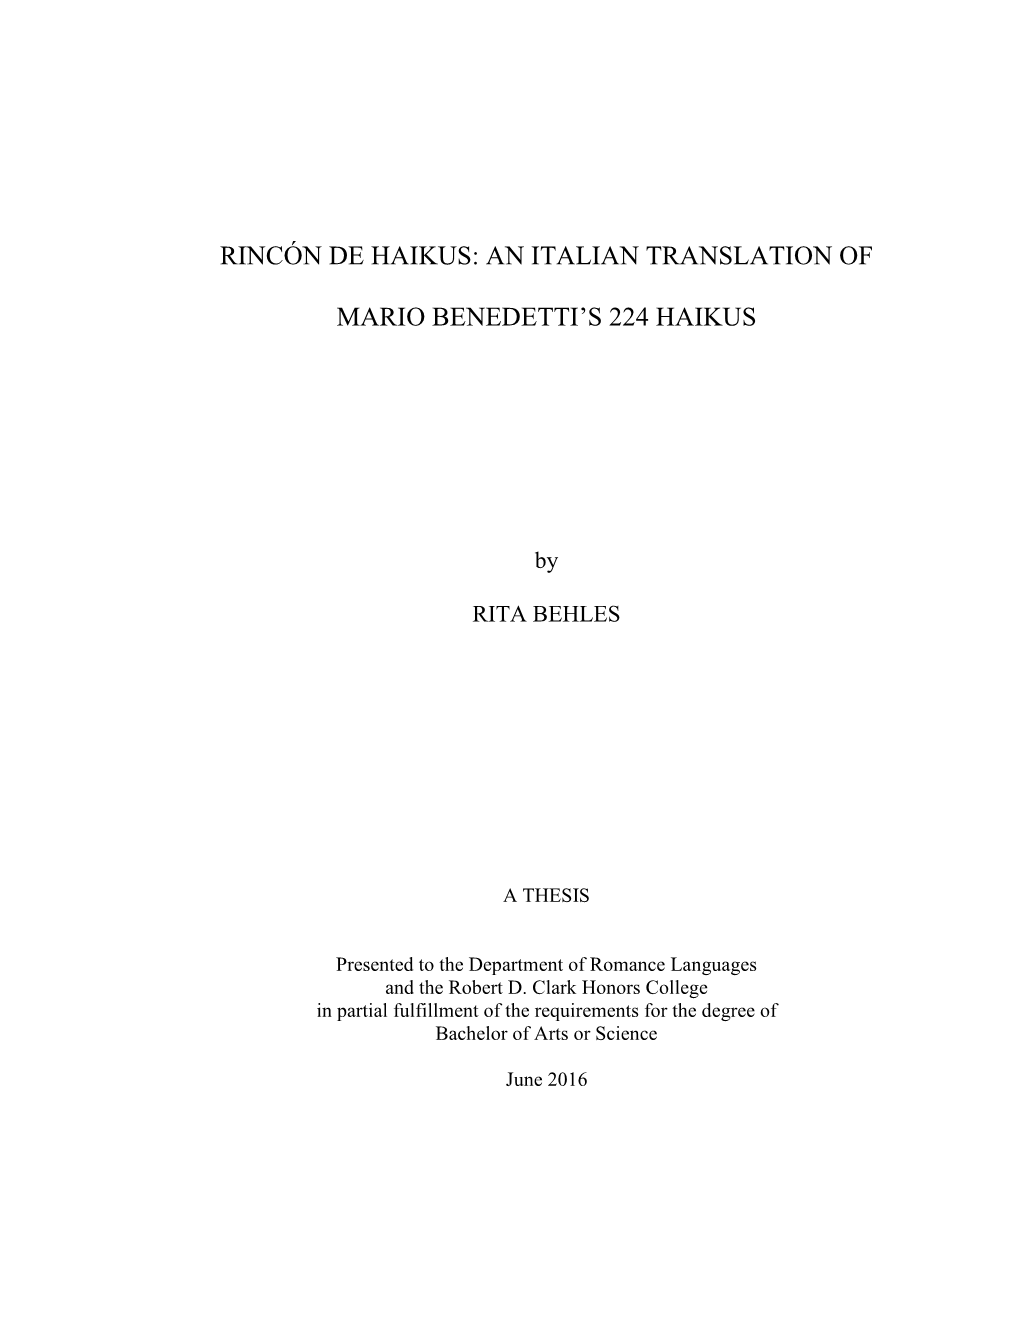 An Italian Translation of Mario Benedetti's 224 Haikus